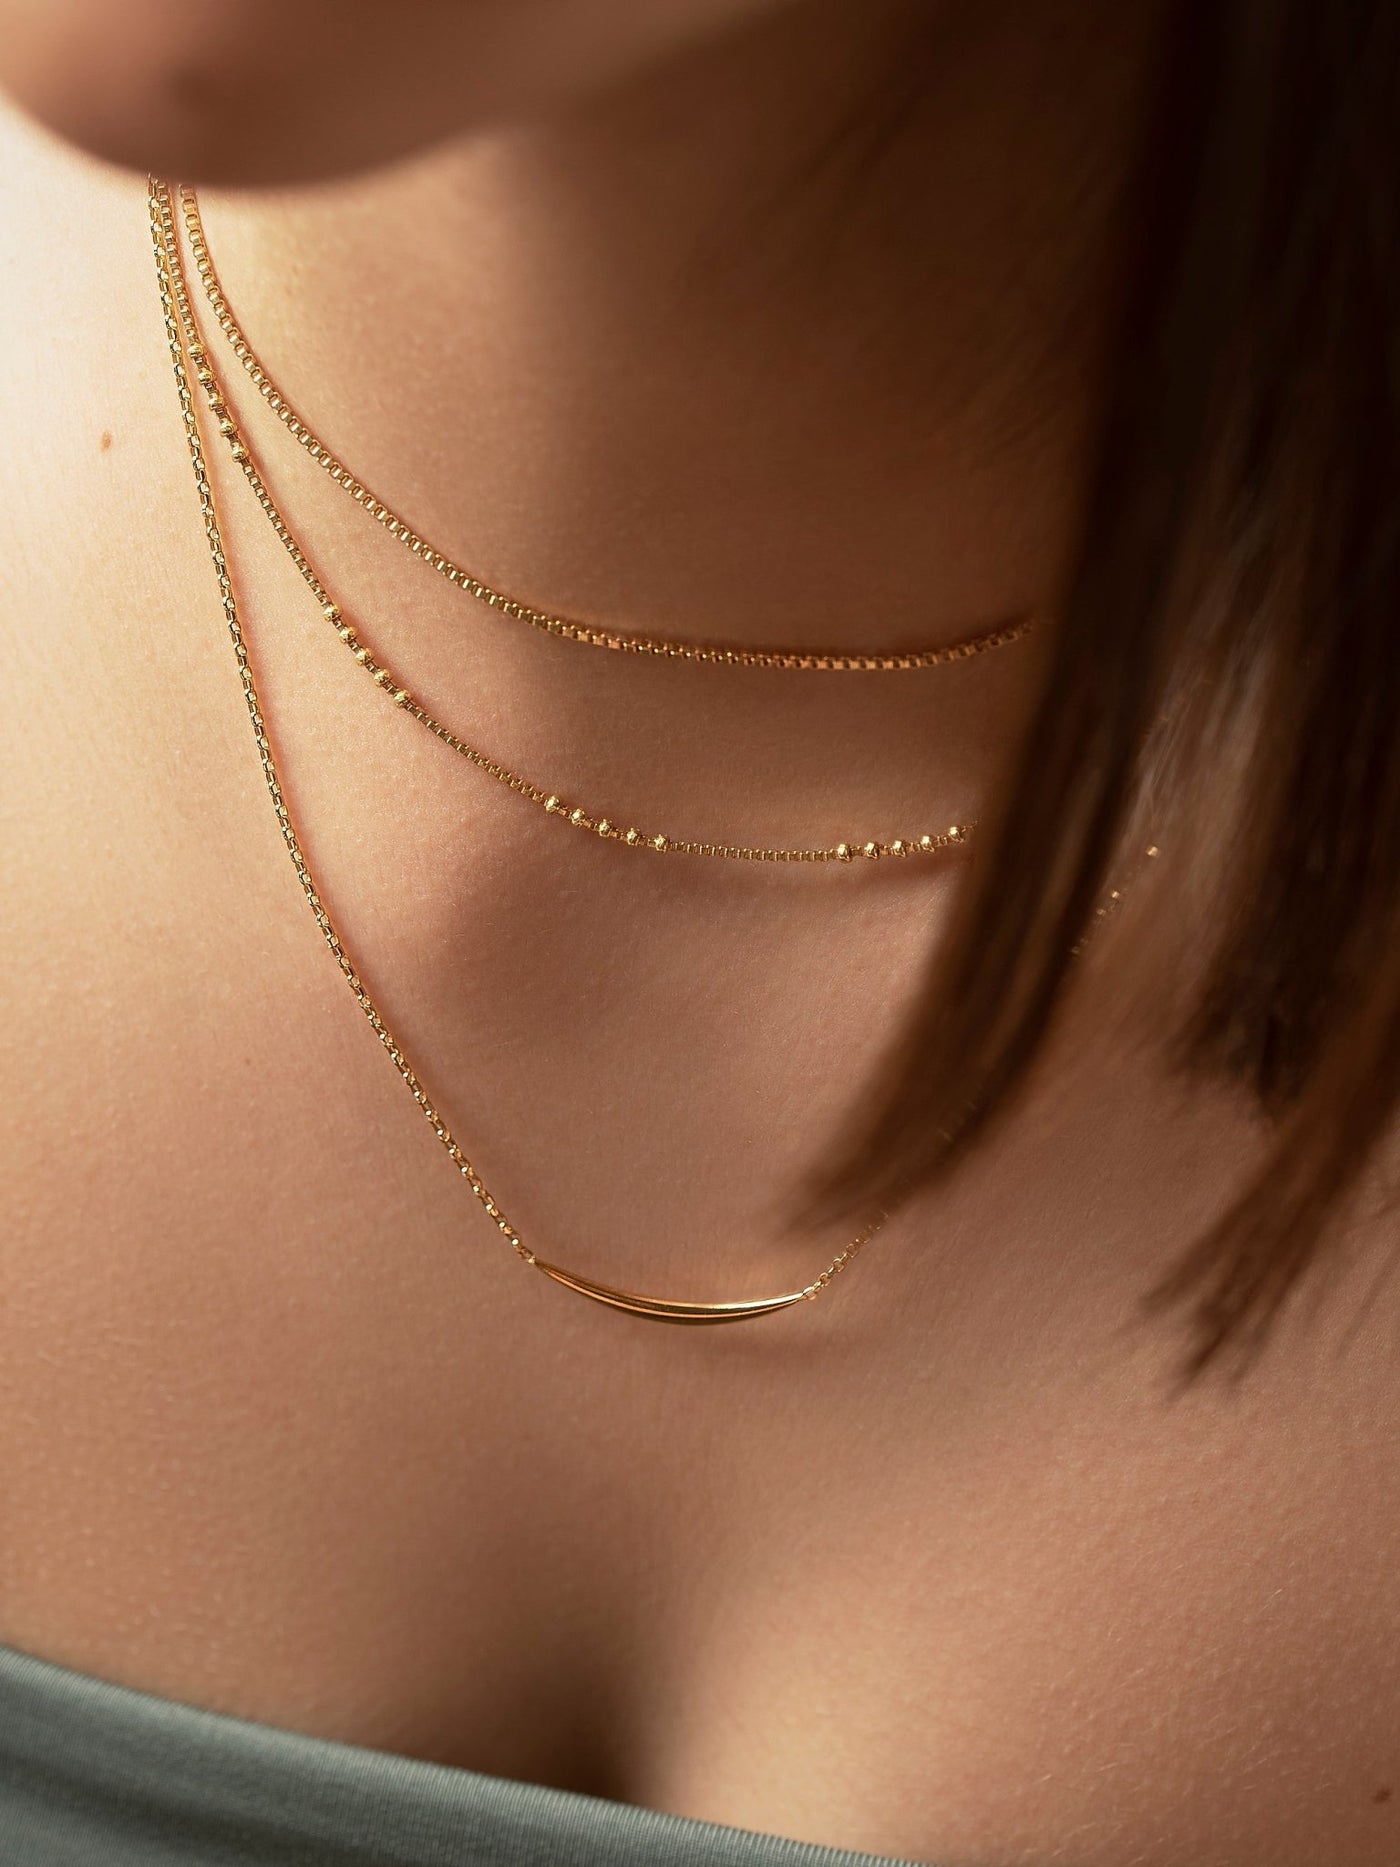 Box Chain Necklace - 925 Sterling SilverAnniversary GiftBackUpItemsLunai Jewelry